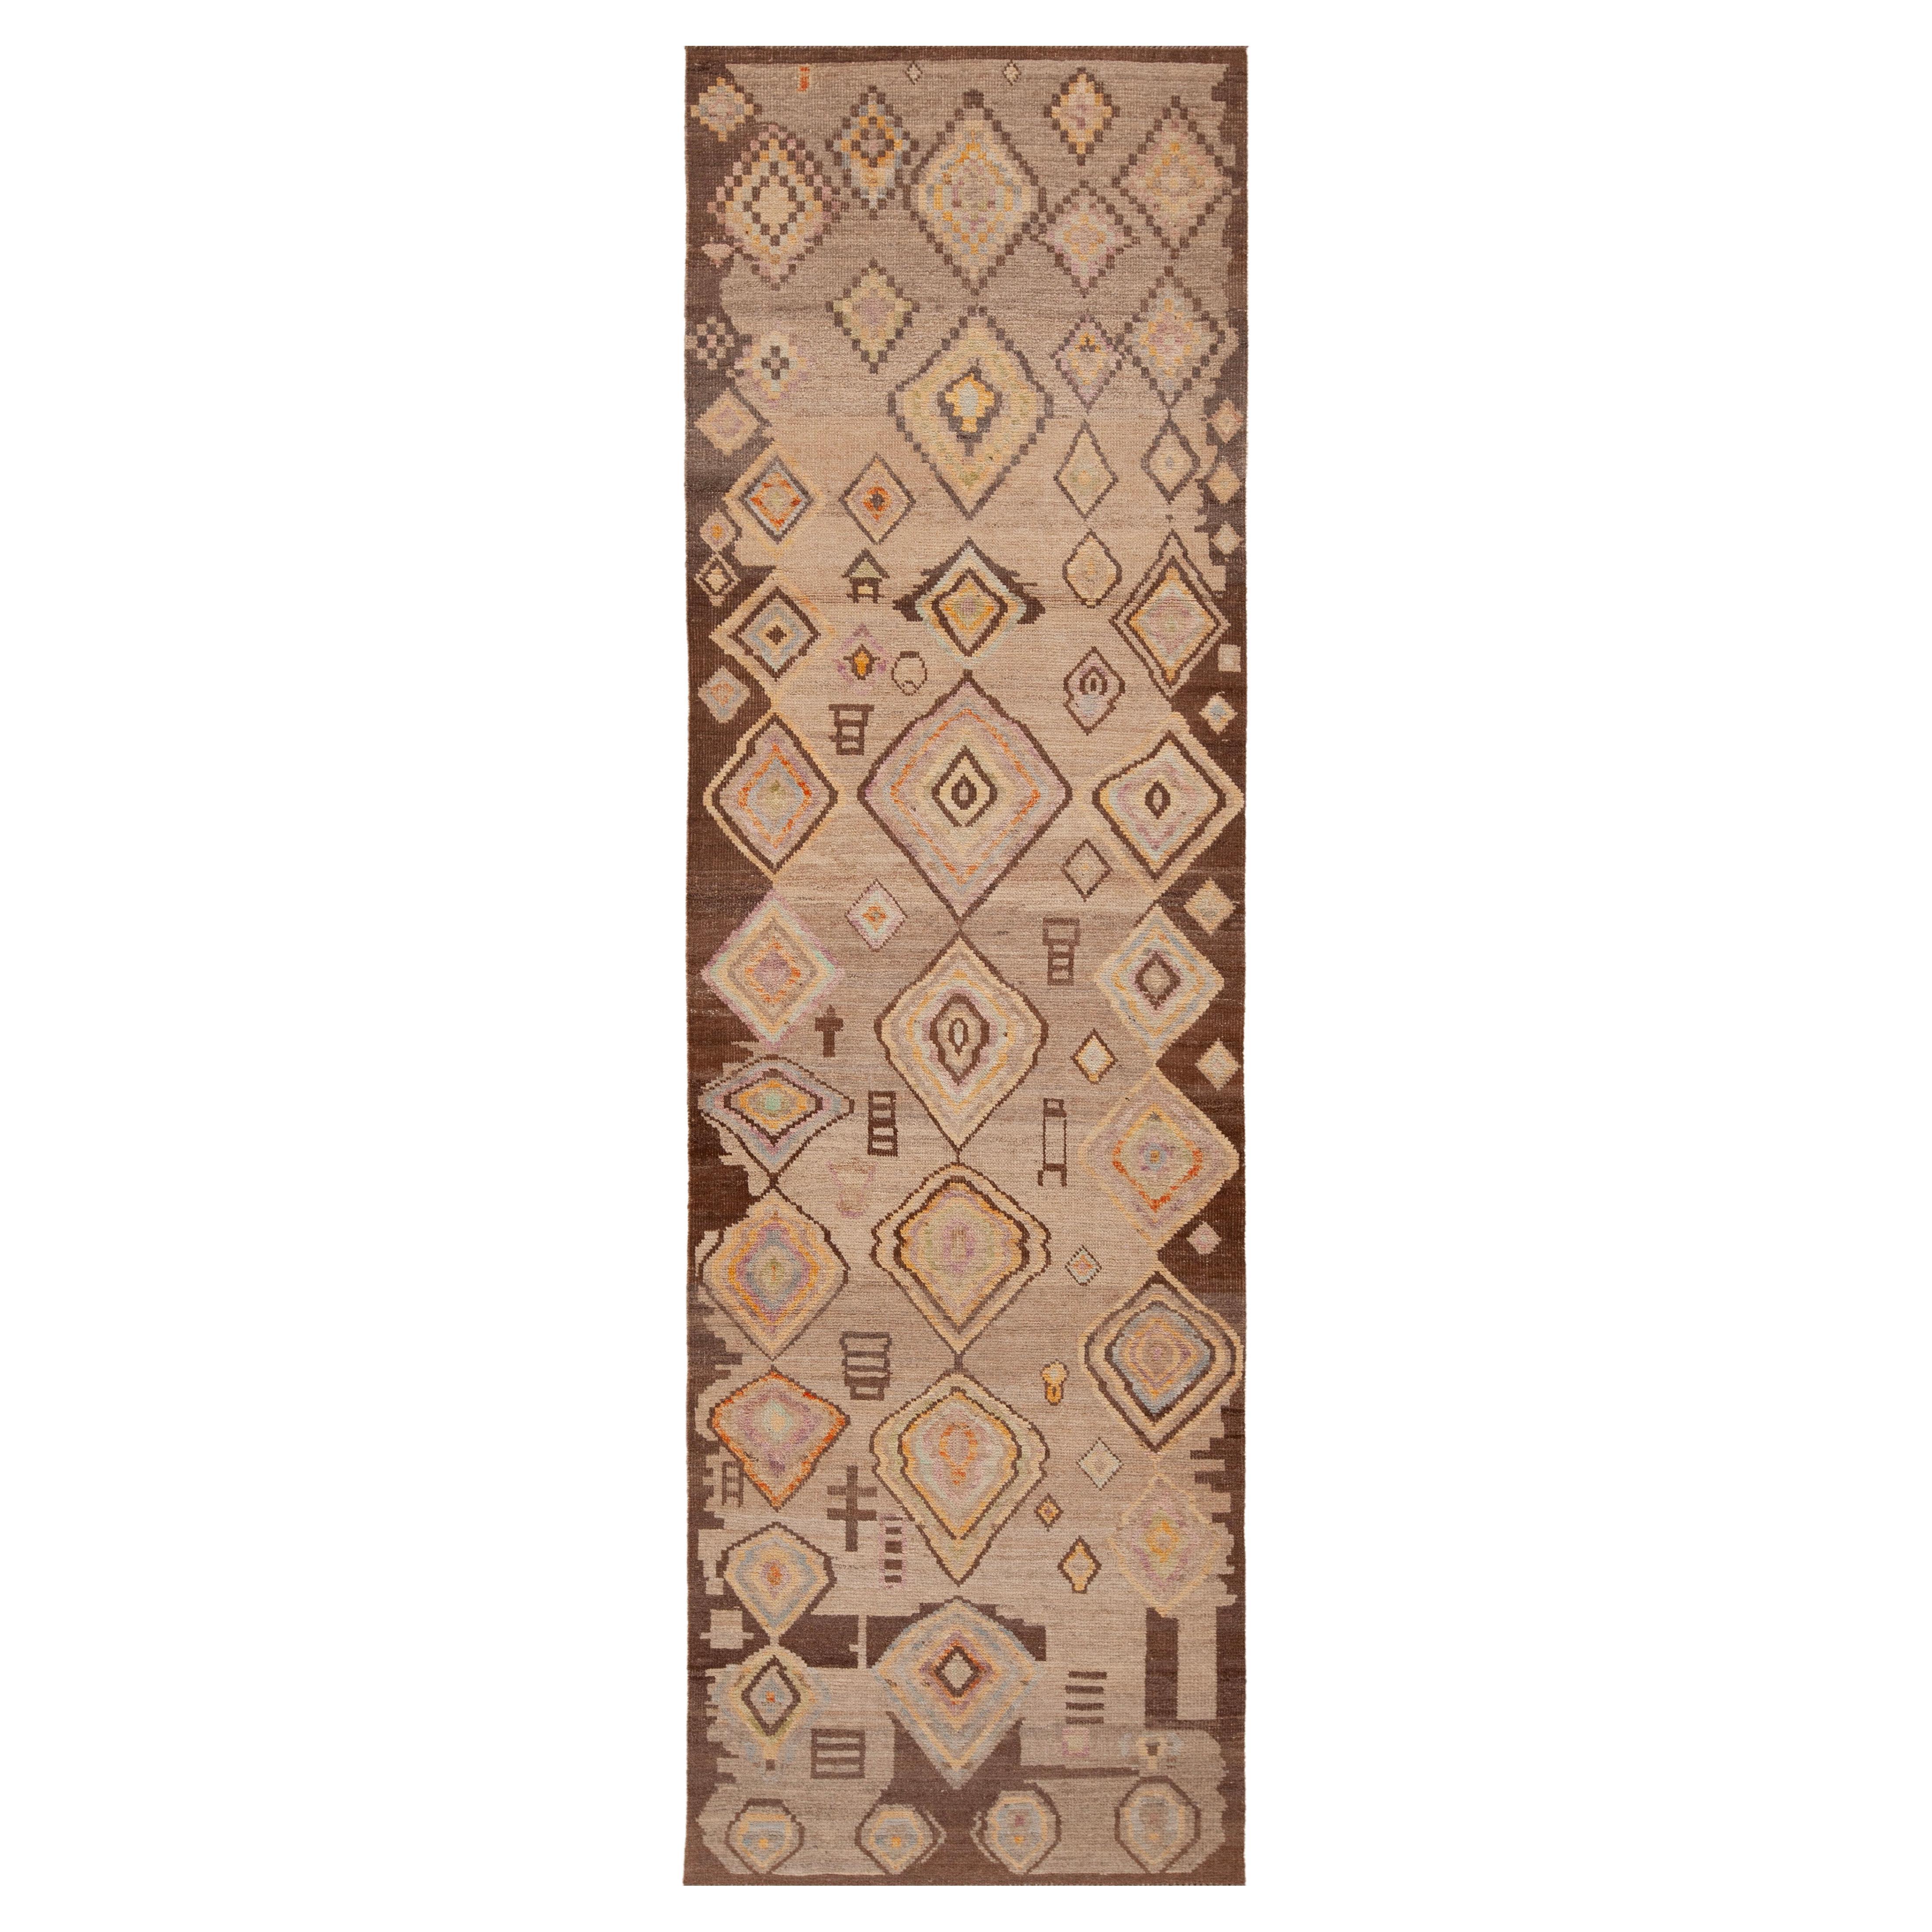 Collection Nazmiyal, tapis de couloir primitif tribal de couleur terre, 3' x 9'8".